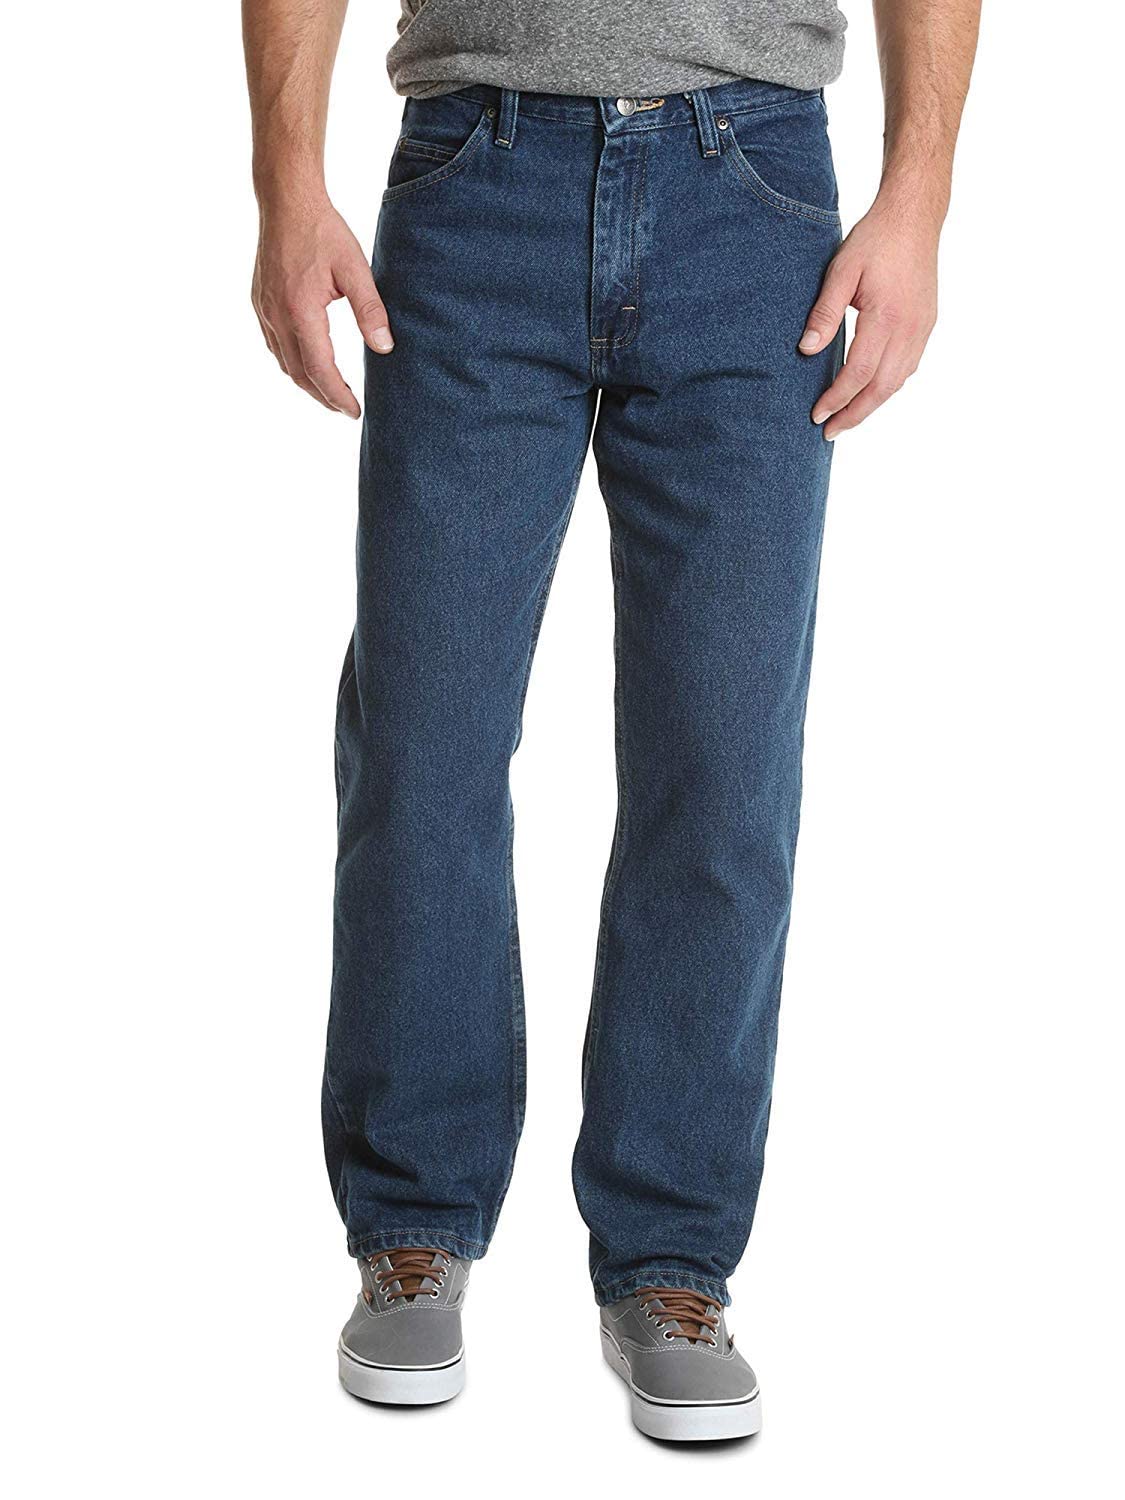 Wrangler Authentics Men's Classic 5-Pocket Relaxed Fit Cotton Jean, Dark Stonewash, 38W X 28L